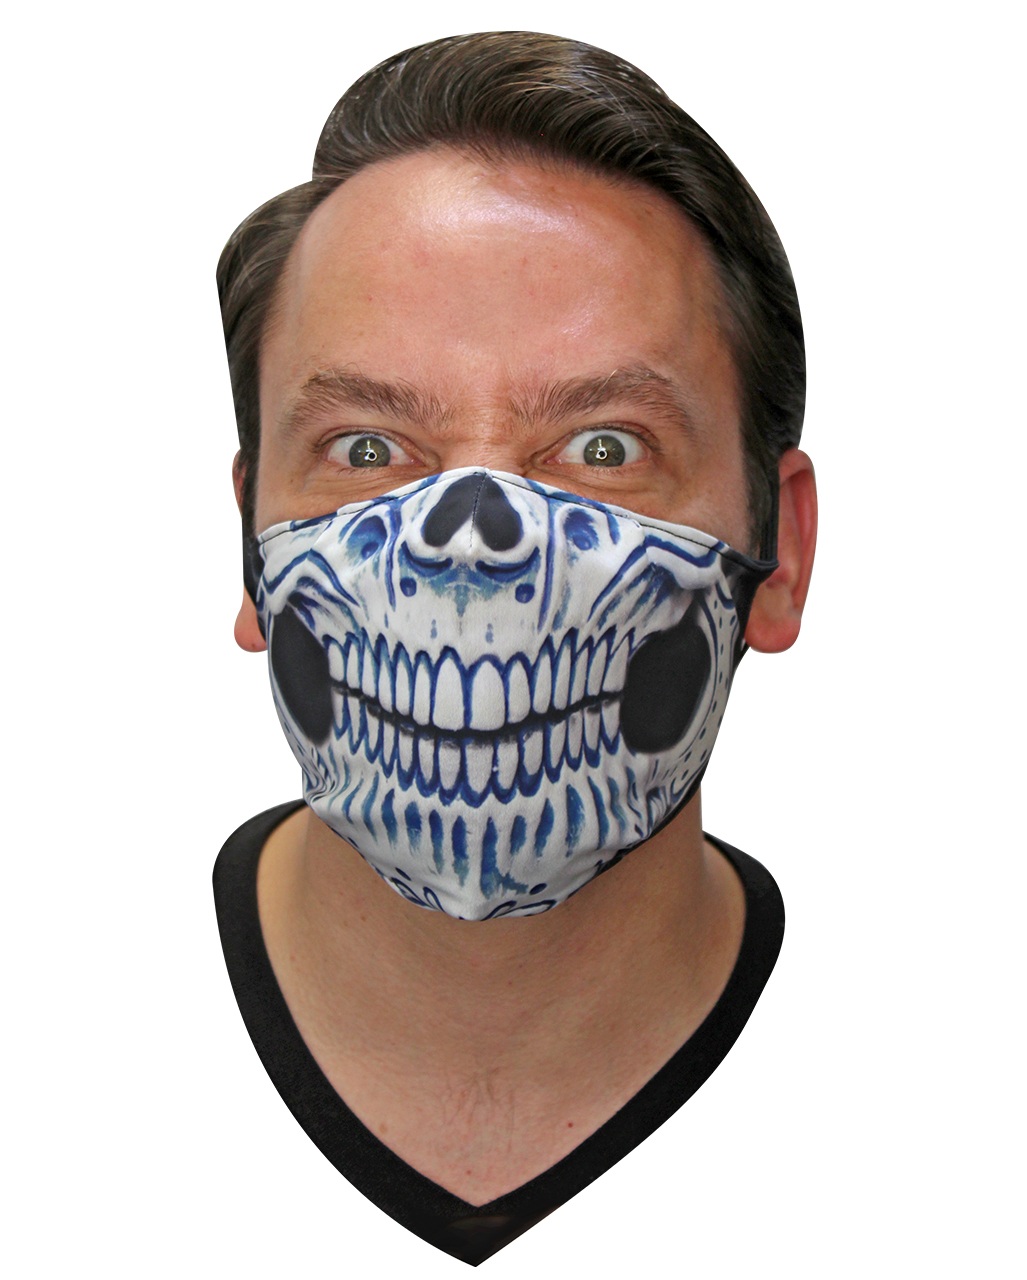 Scary Evil Skeleton Skull Stocking Fabric Mask Costume Accessory 